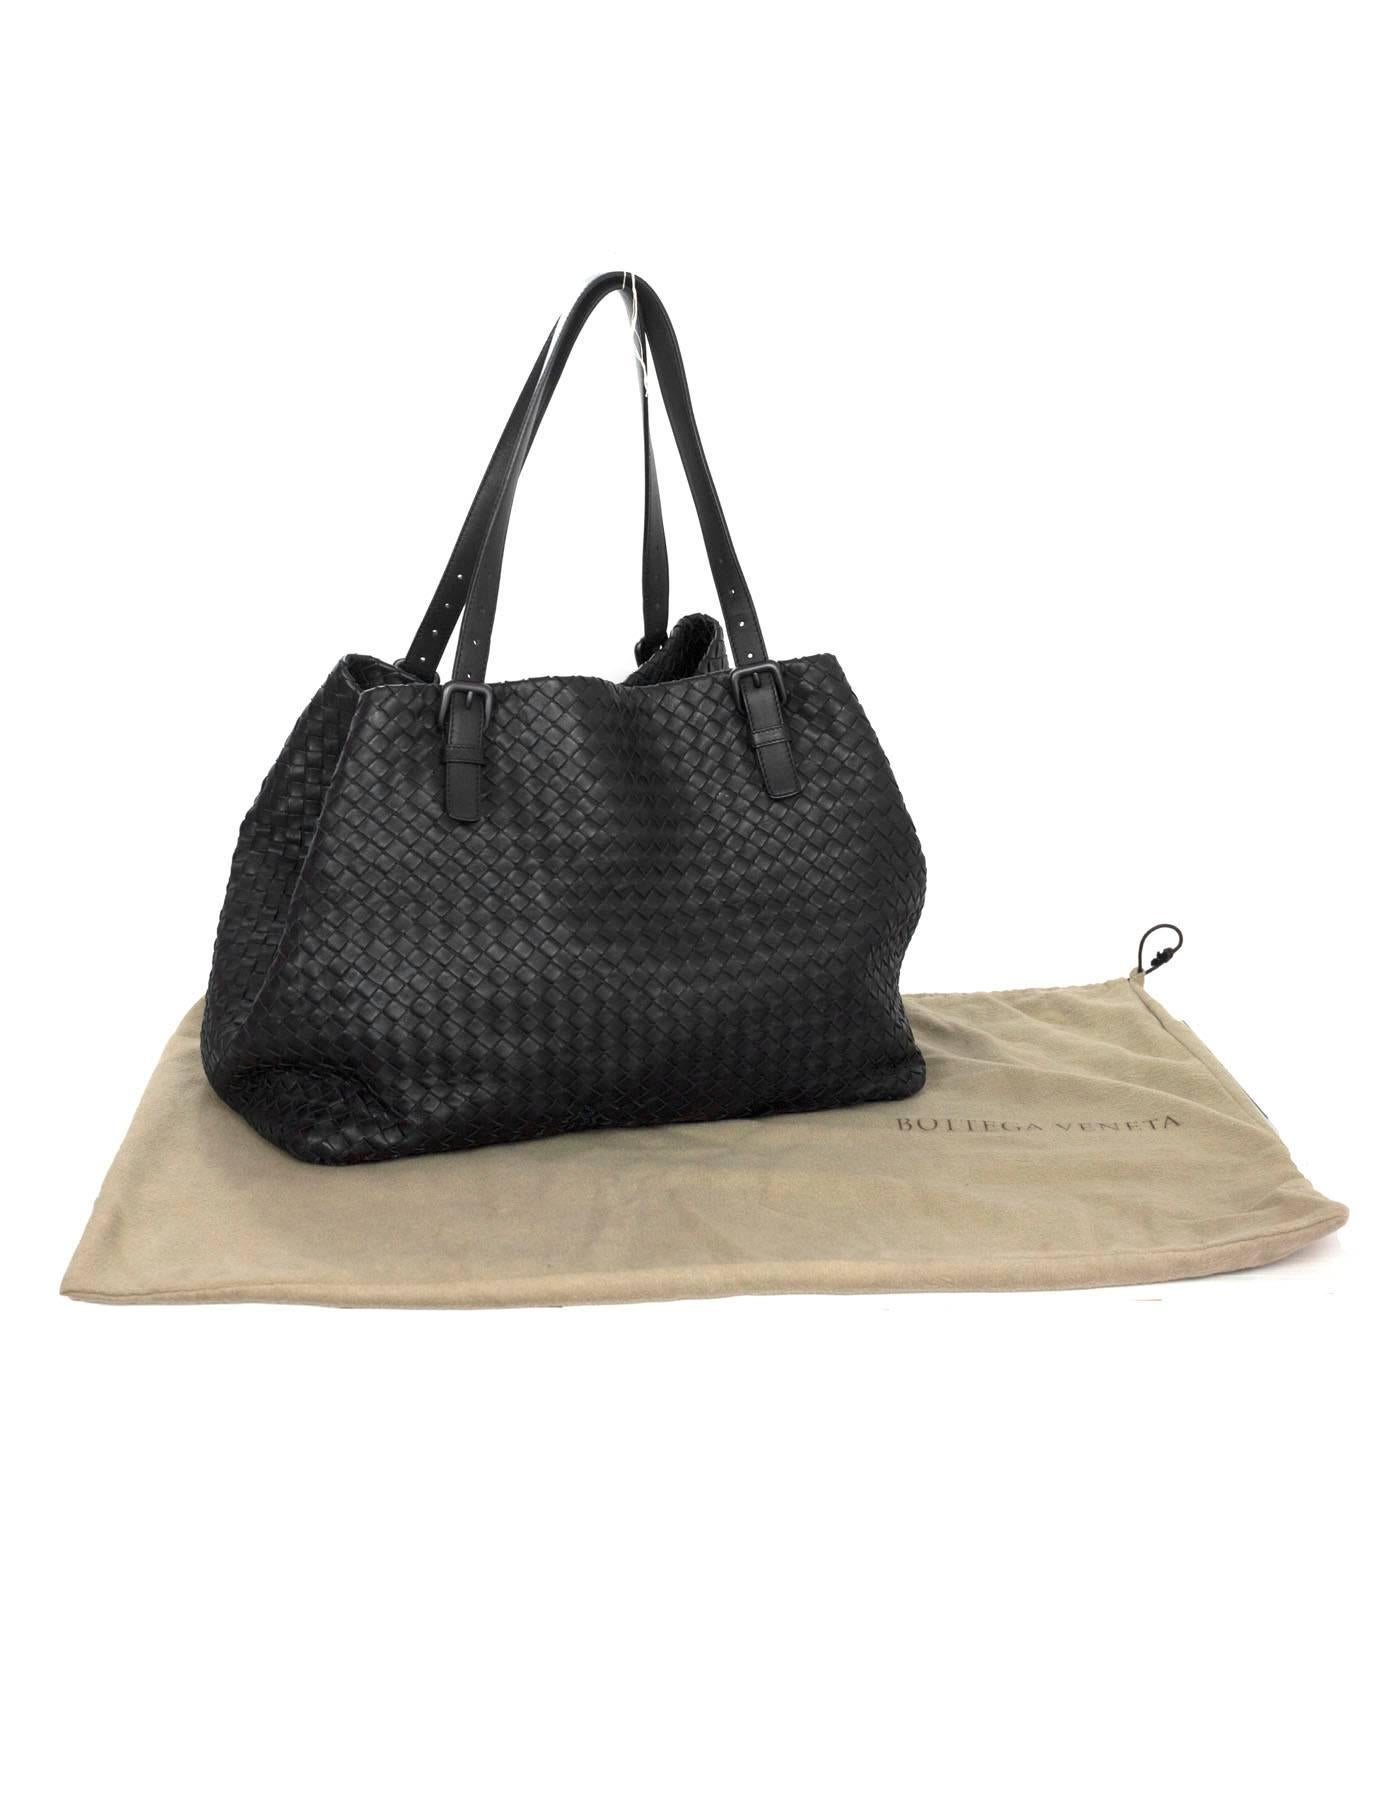 Bottega Veneta Black Intrecciato Large Tote Bag rt. $3, 950 6